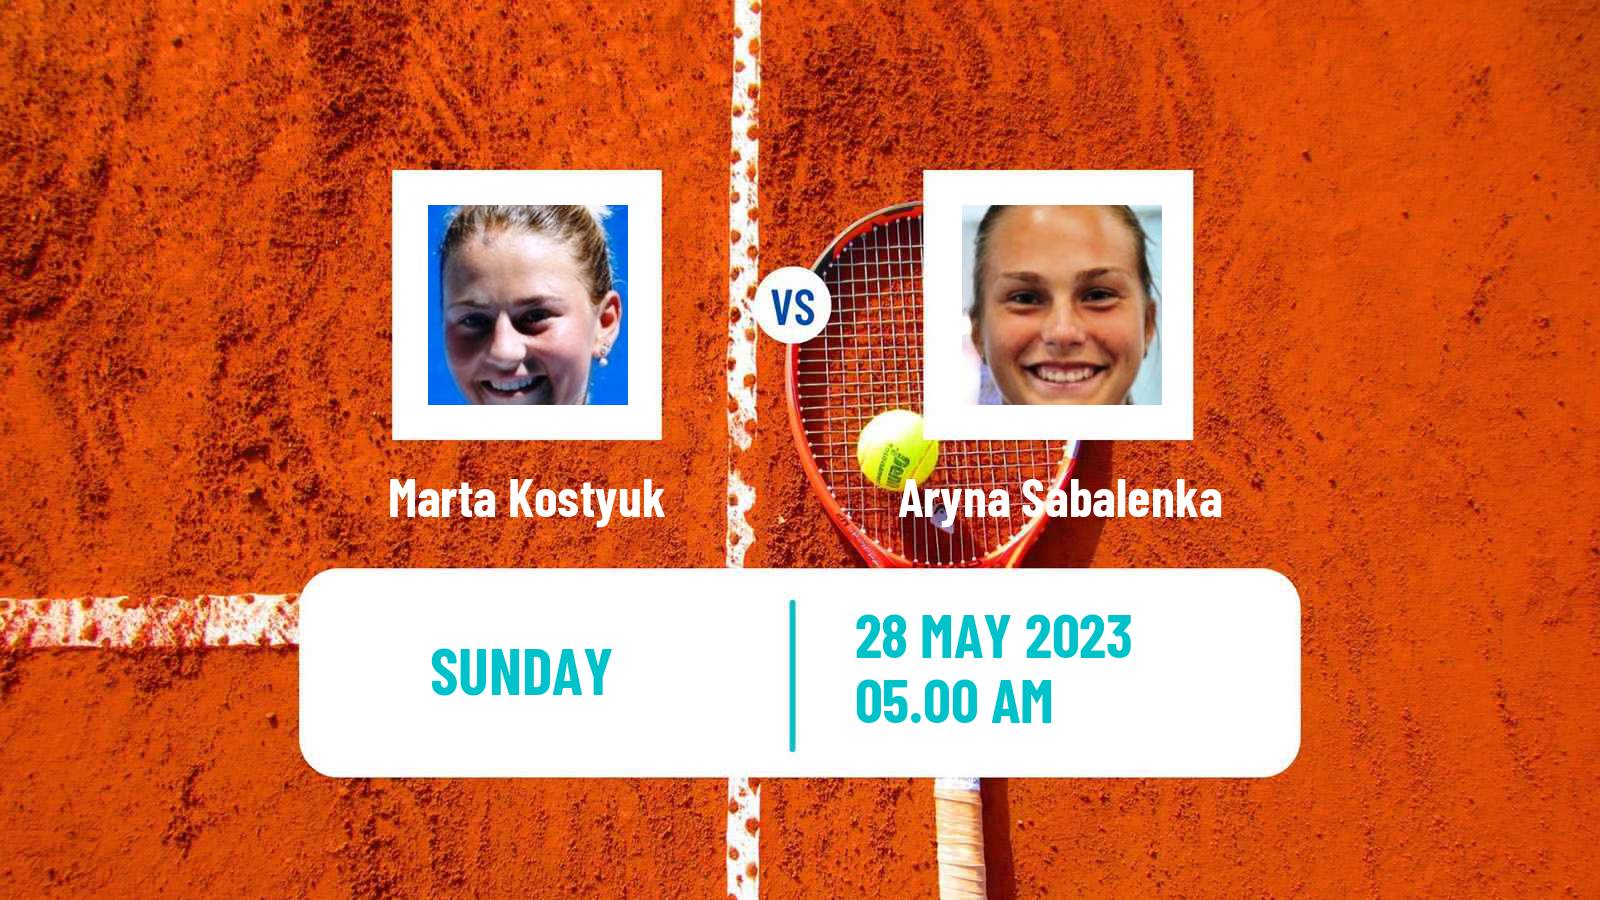 Tennis WTA Roland Garros Marta Kostyuk - Aryna Sabalenka